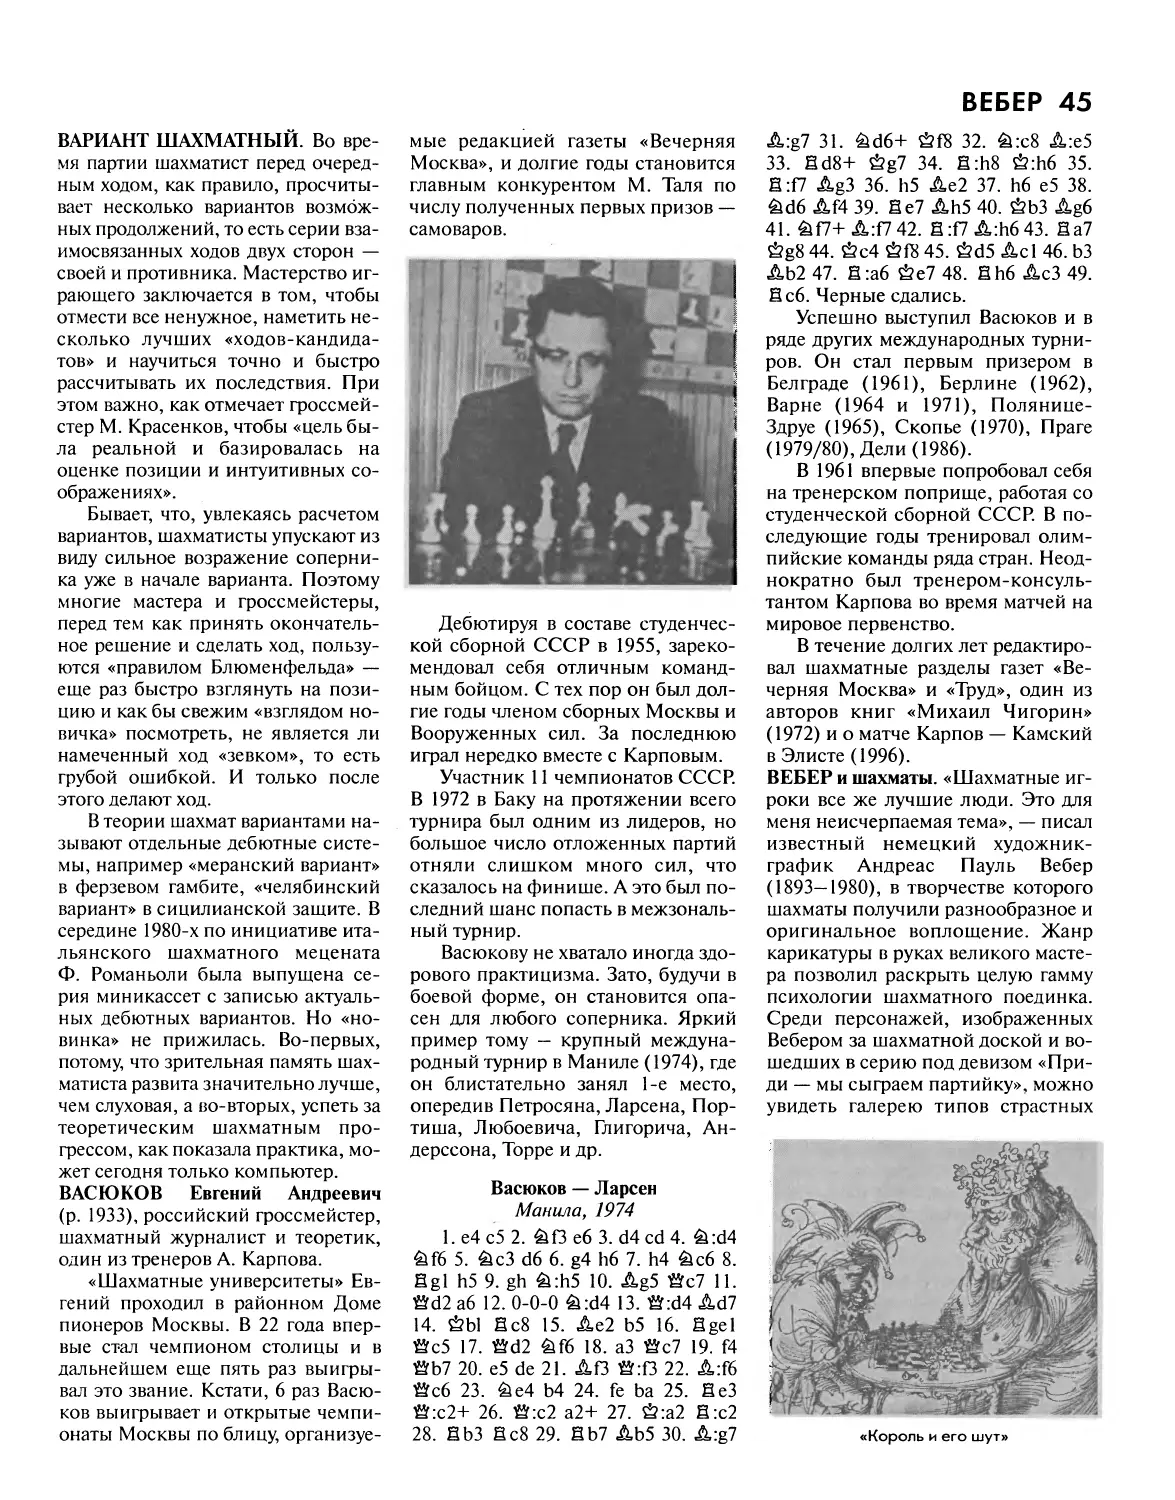 Вариант шахматный
Васюков Е.А.
Вебер и шахматы